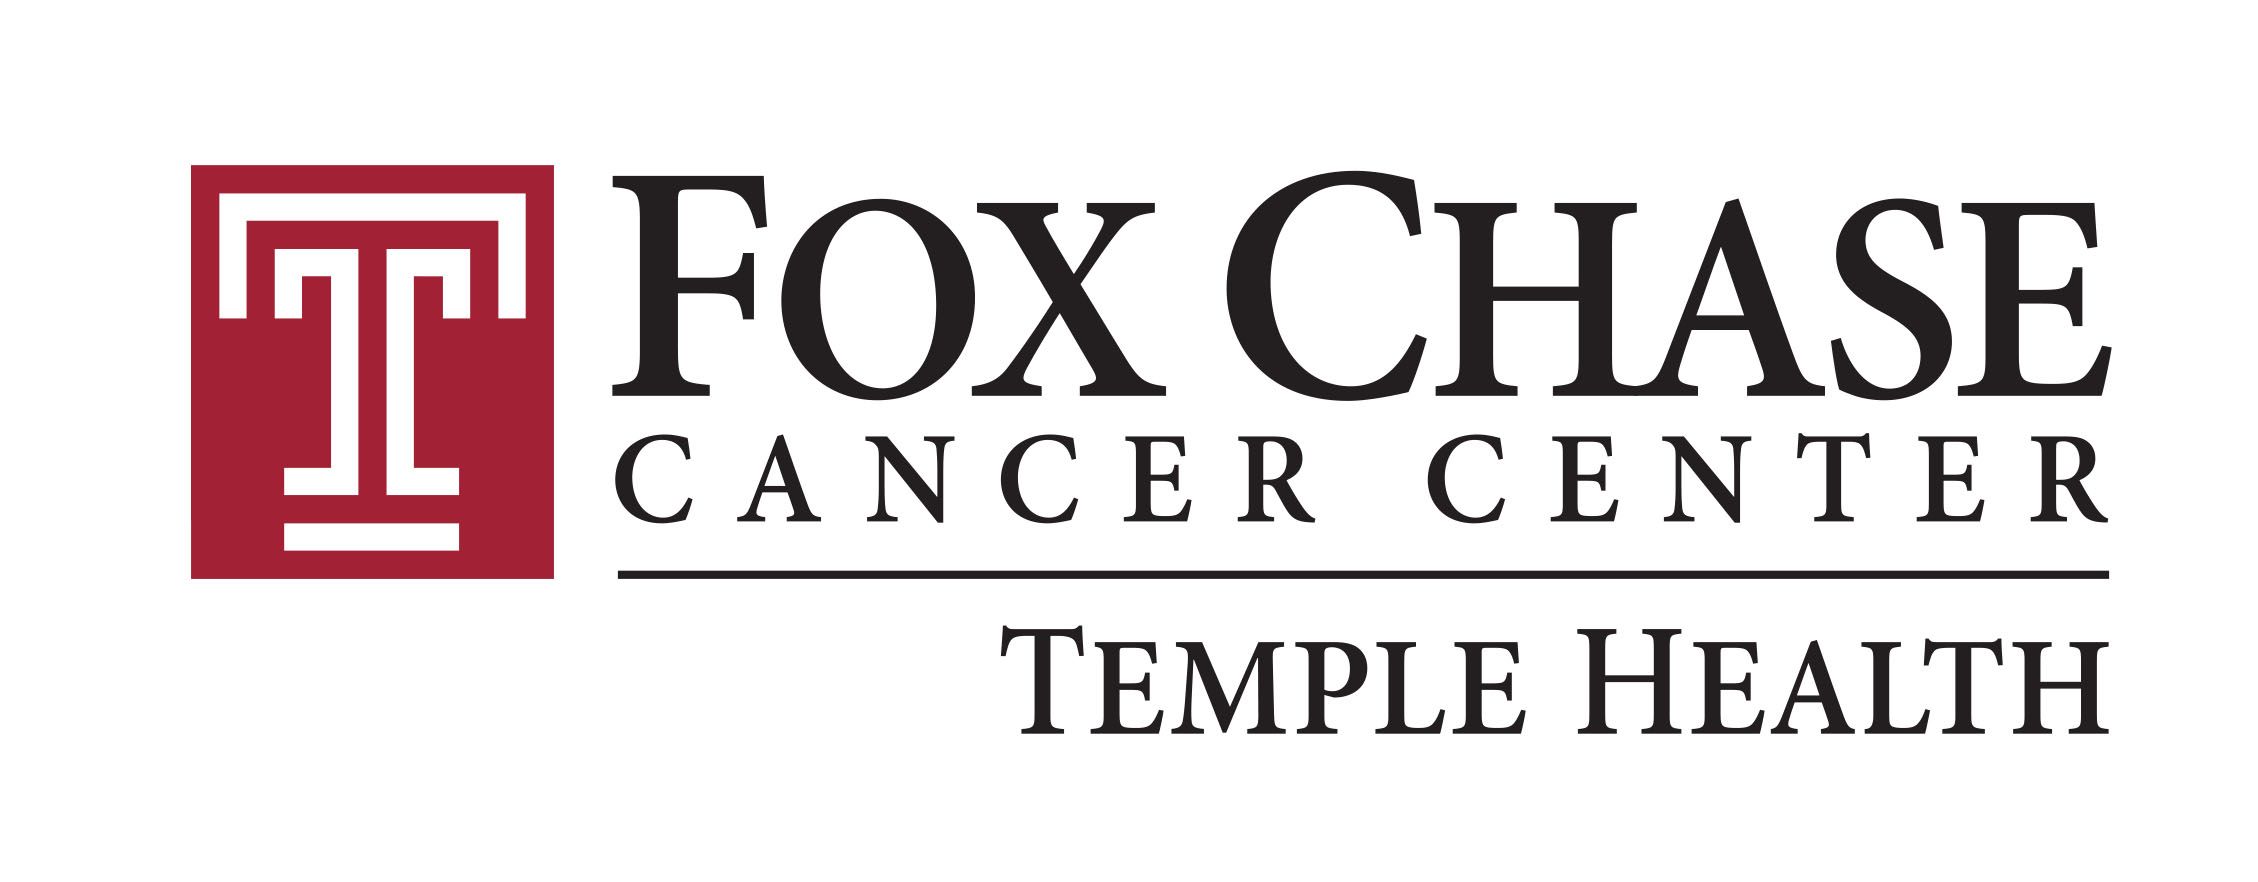 Fox Chase Cancer Center